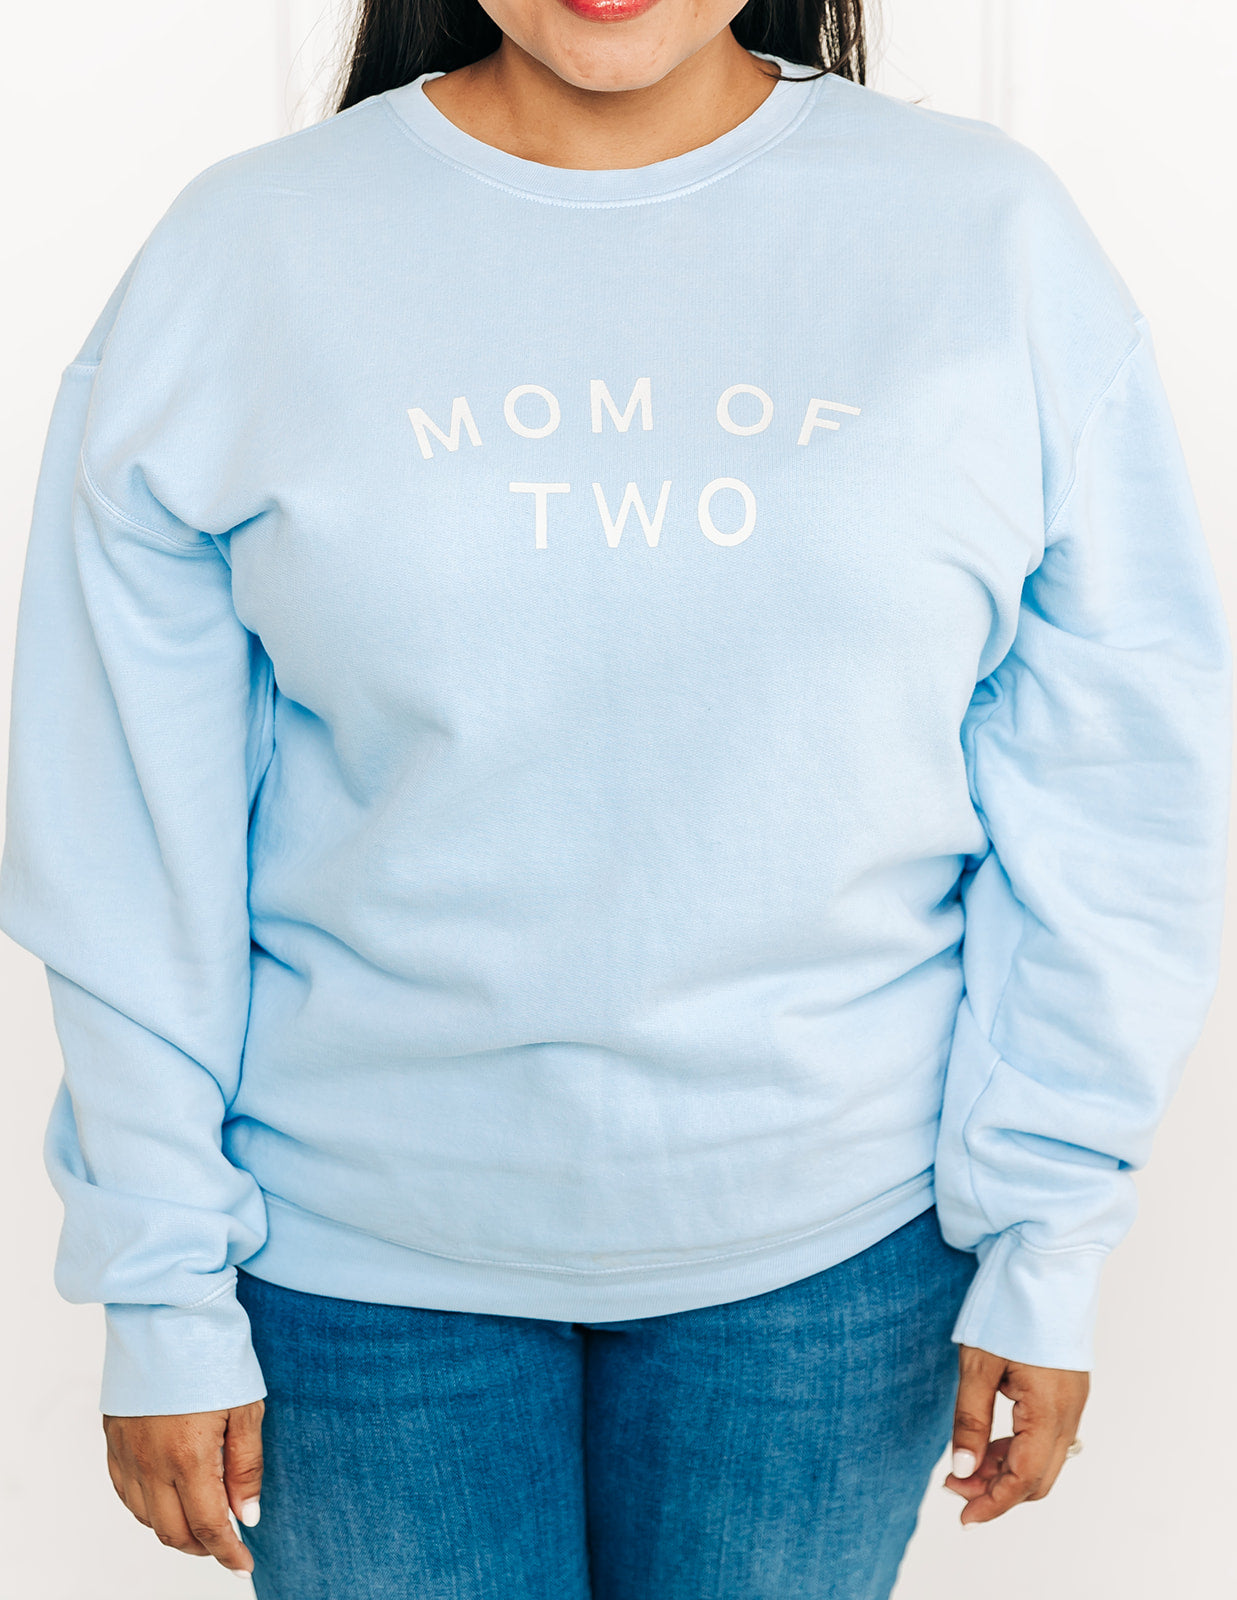 Mom of _____ Sweatshirt in Hydrangea